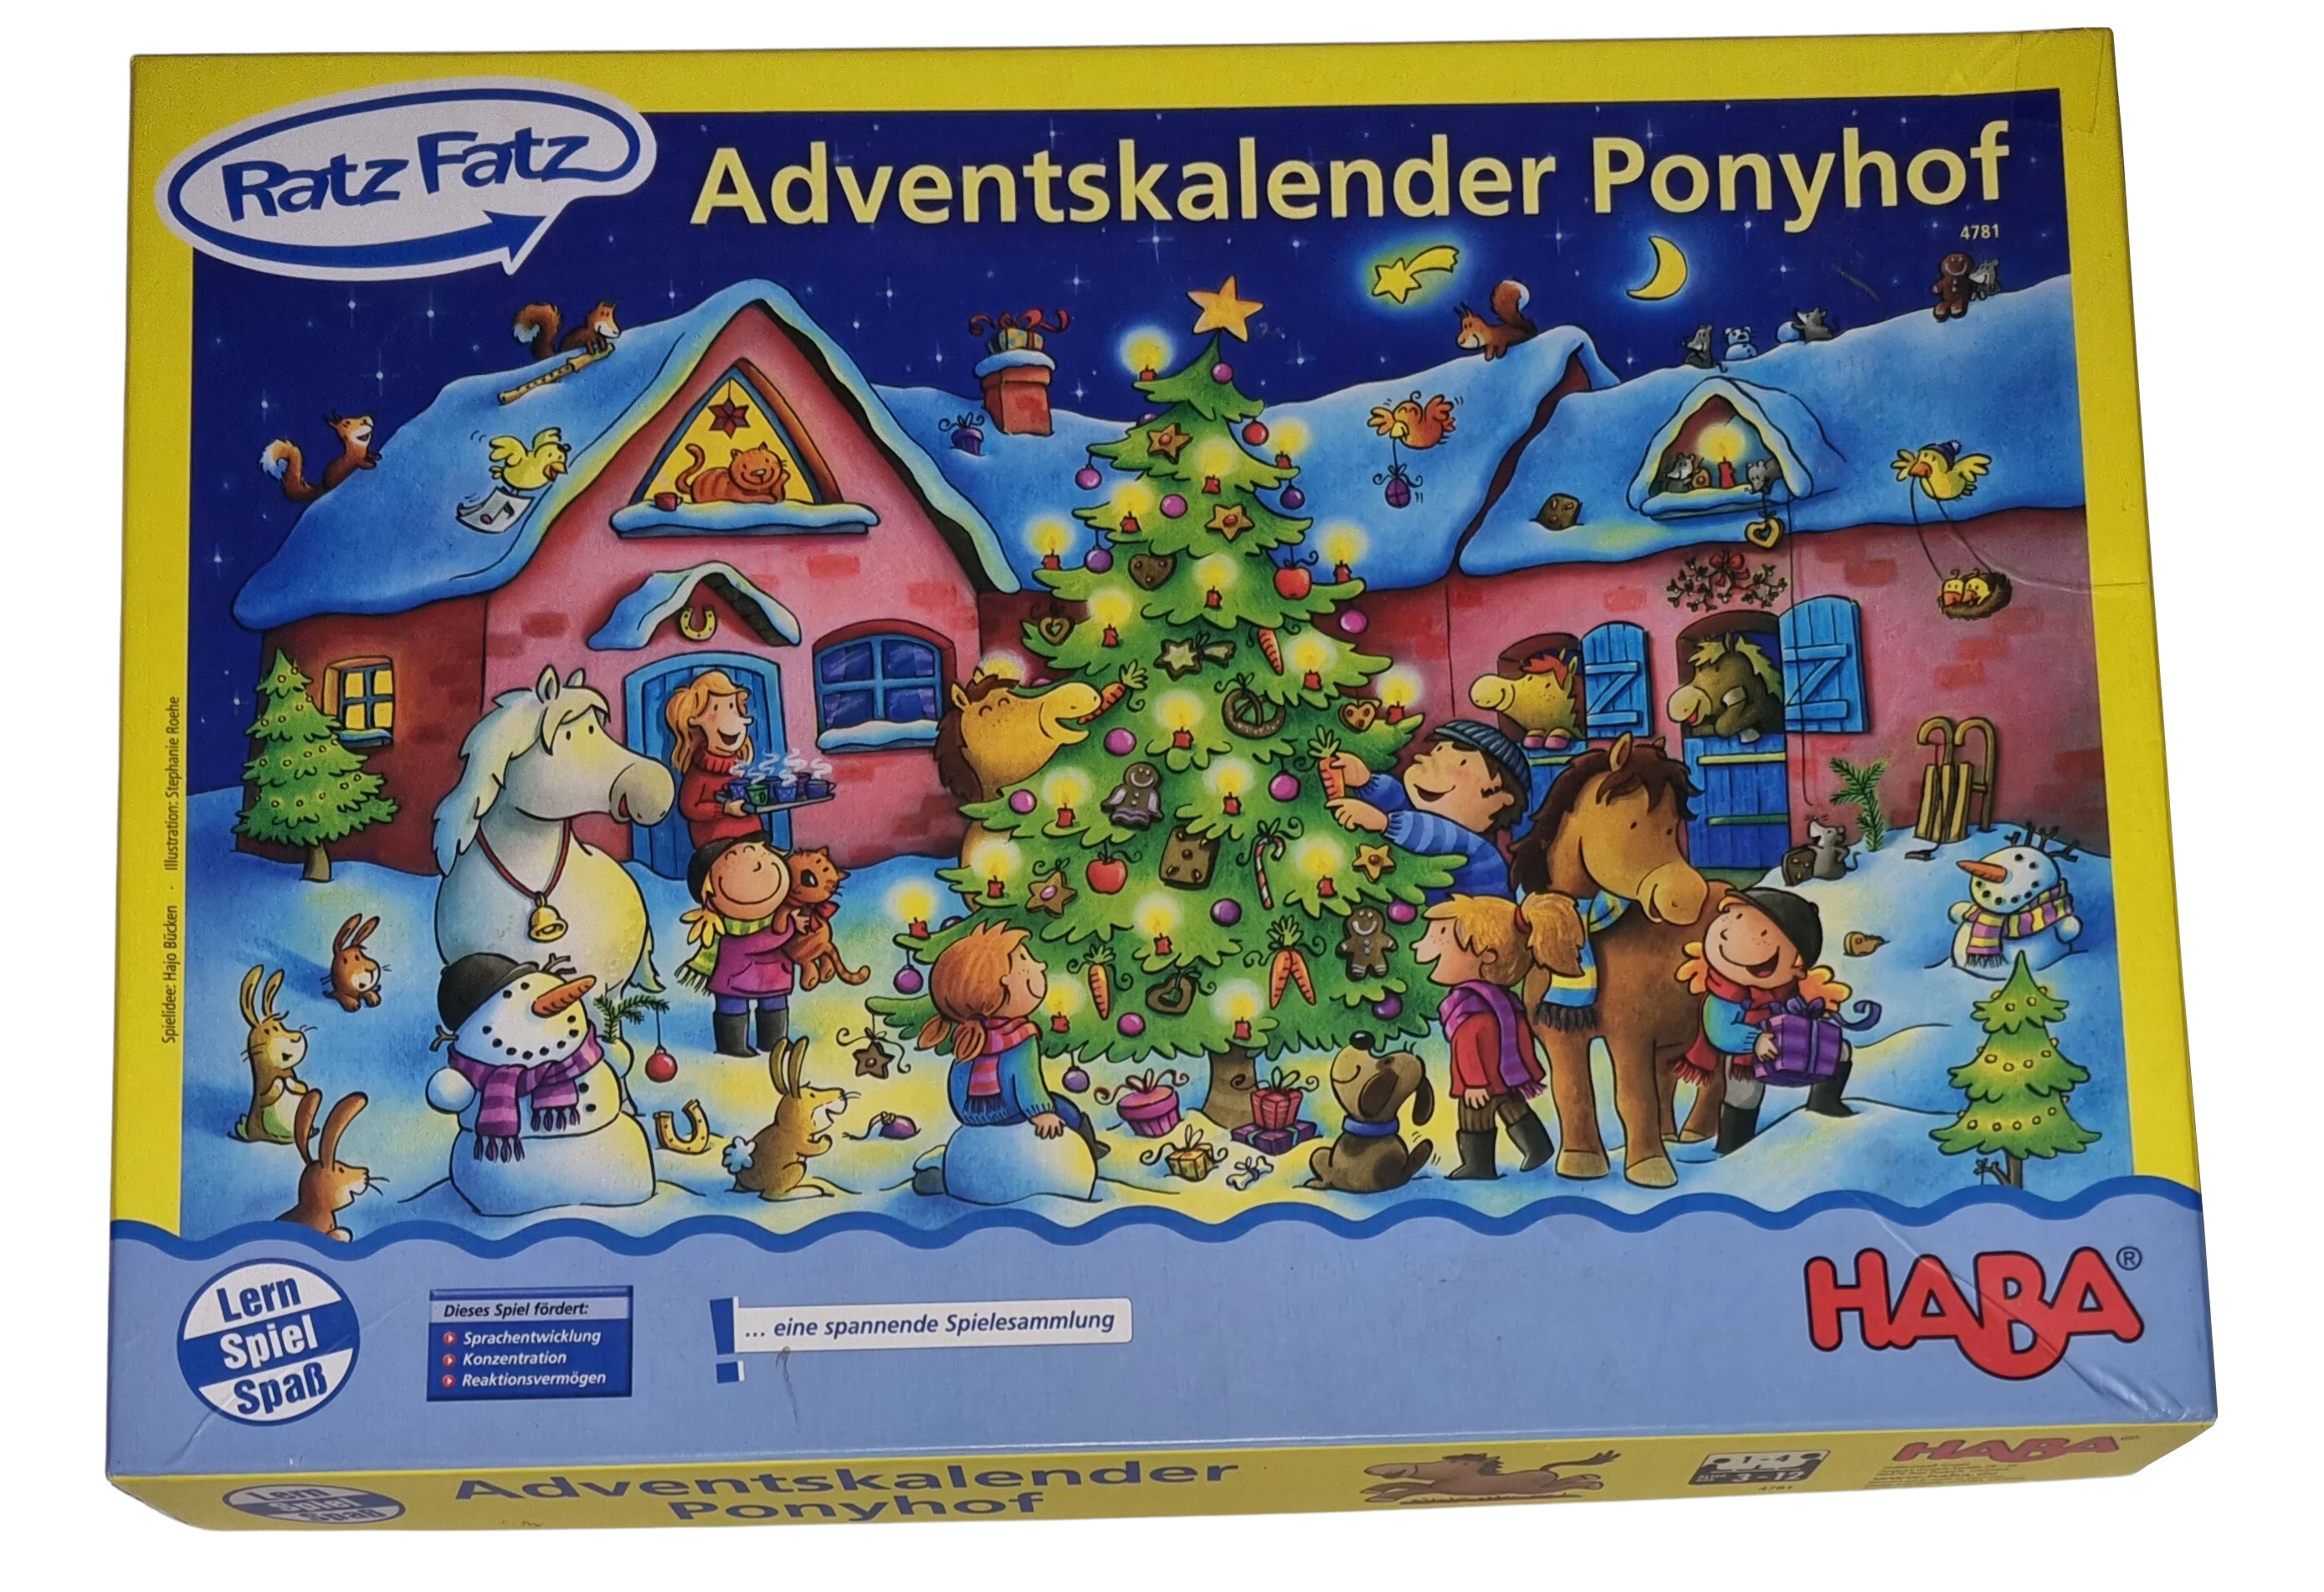 Haba Ratz Fatz Adventskalender Ponyhof 4781